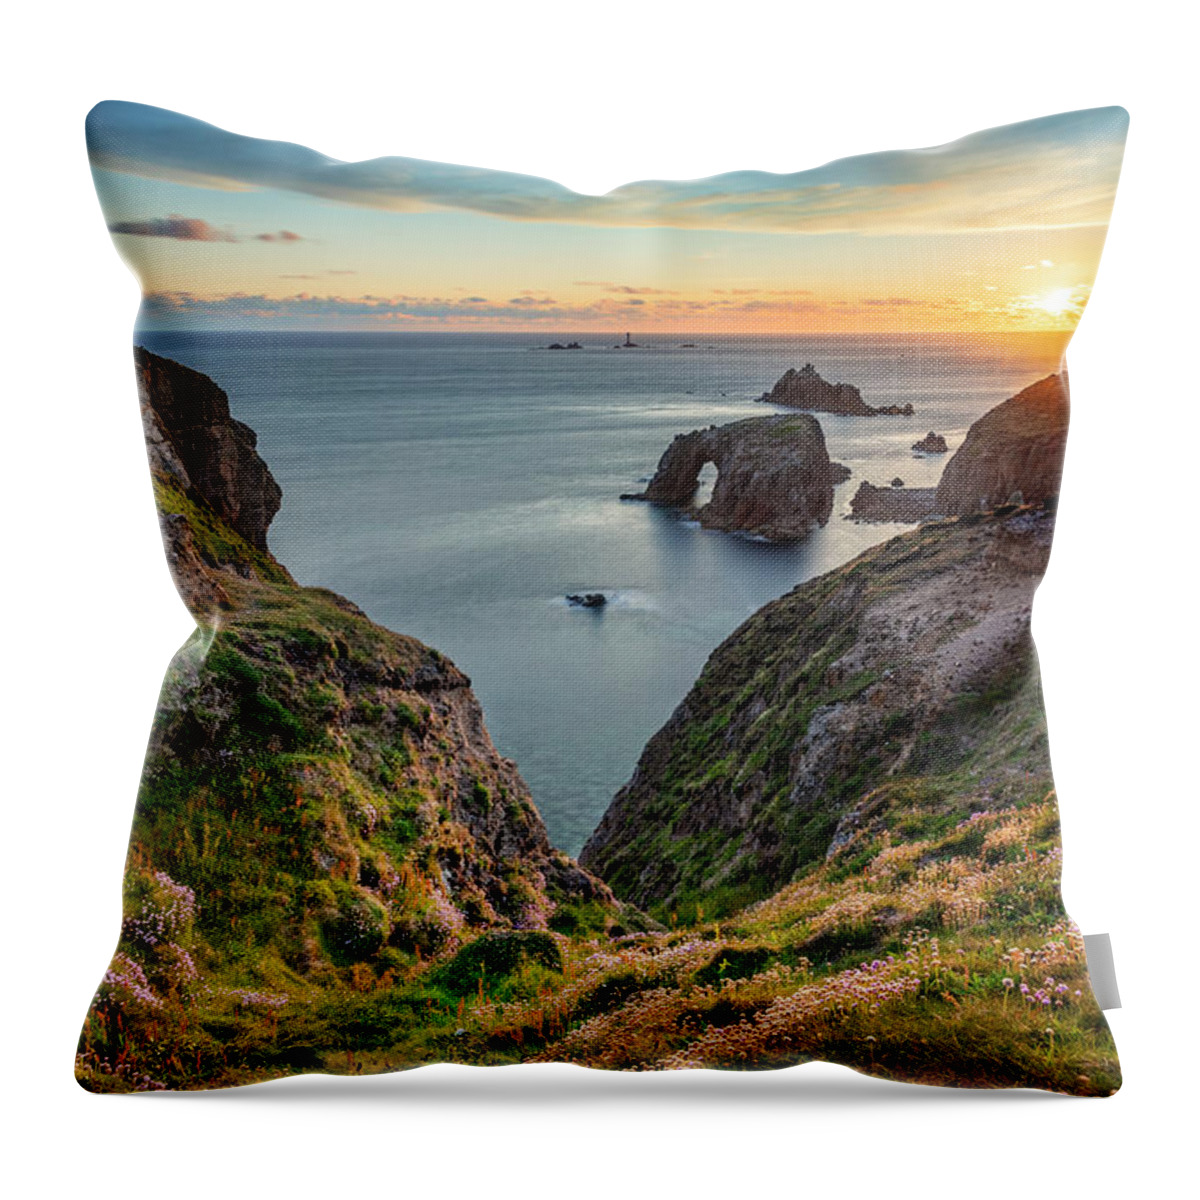 Estock Throw Pillow featuring the digital art Coastal Rock Formations #1 by Reinhard Schmid